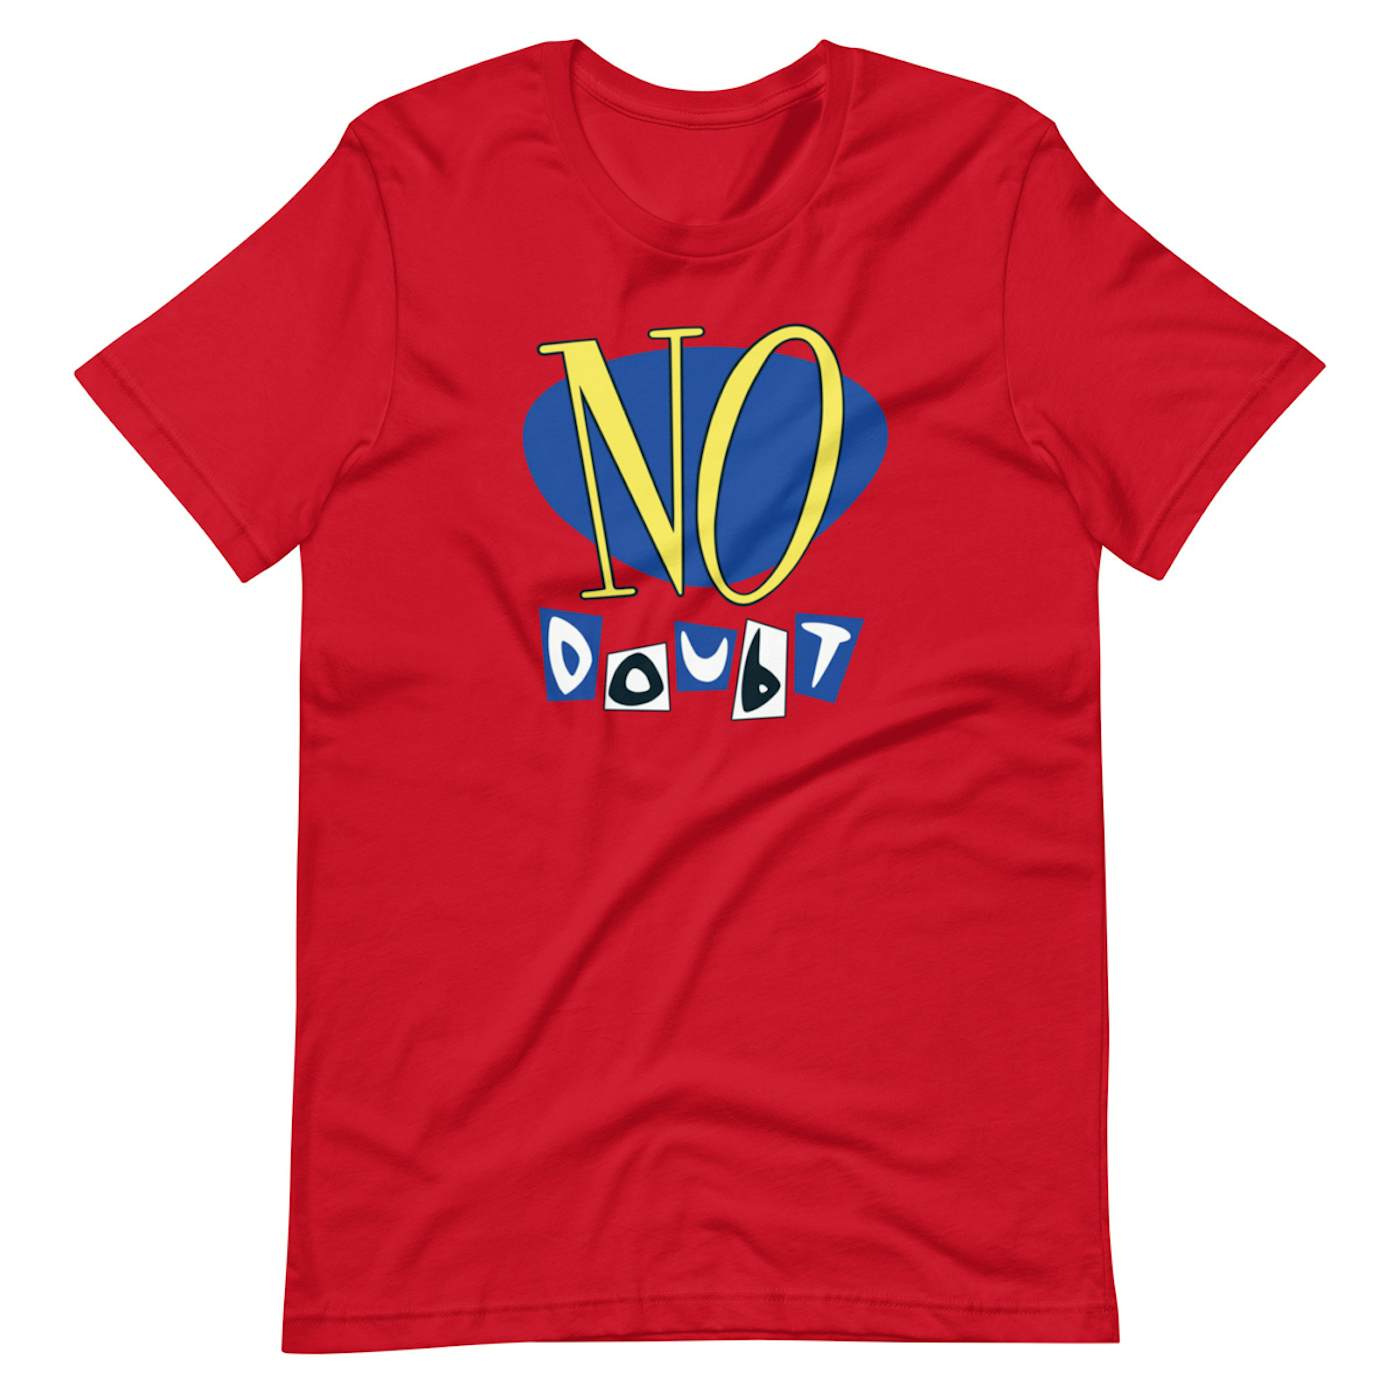 No Doubt Vinyl Release Red T-Shirt